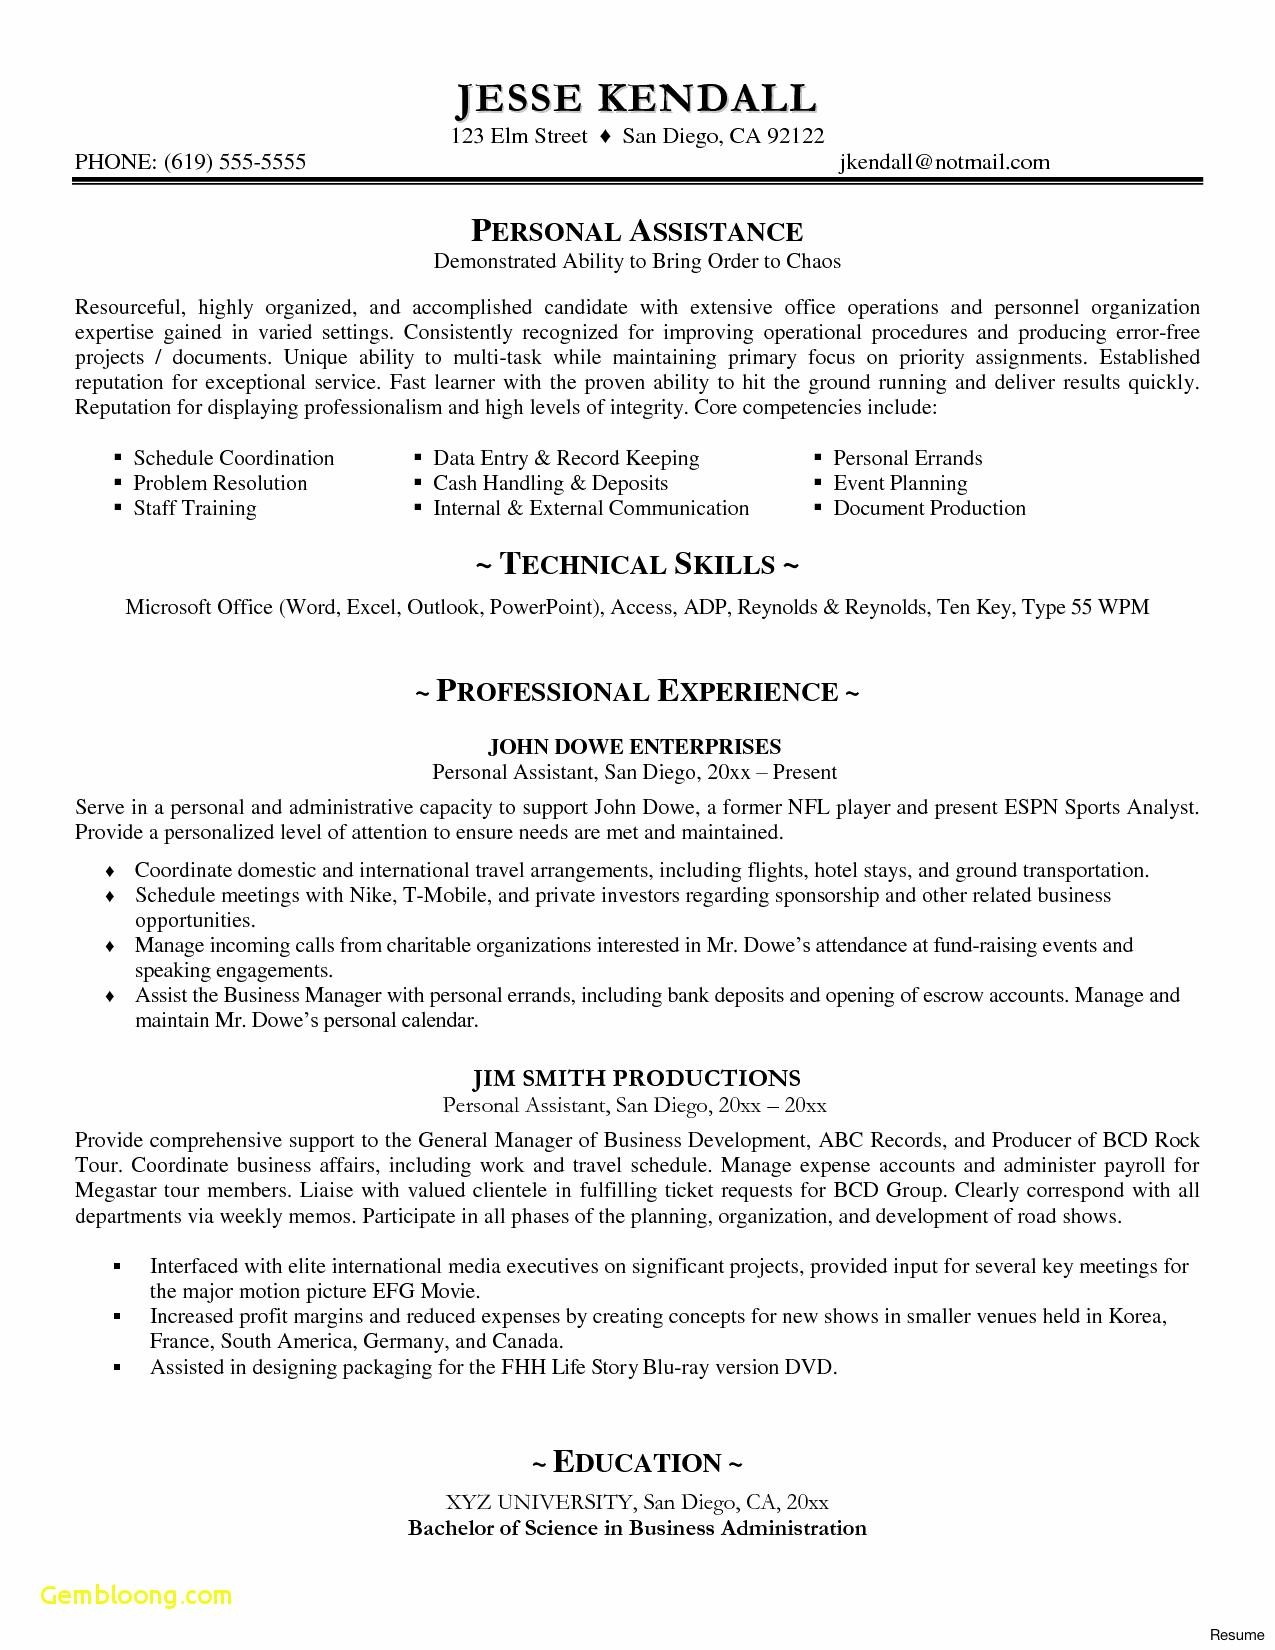 Professional Resume Writers Ward Resumes Professional Resume Writers San Diego Ca professional resume writers|wikiresume.com